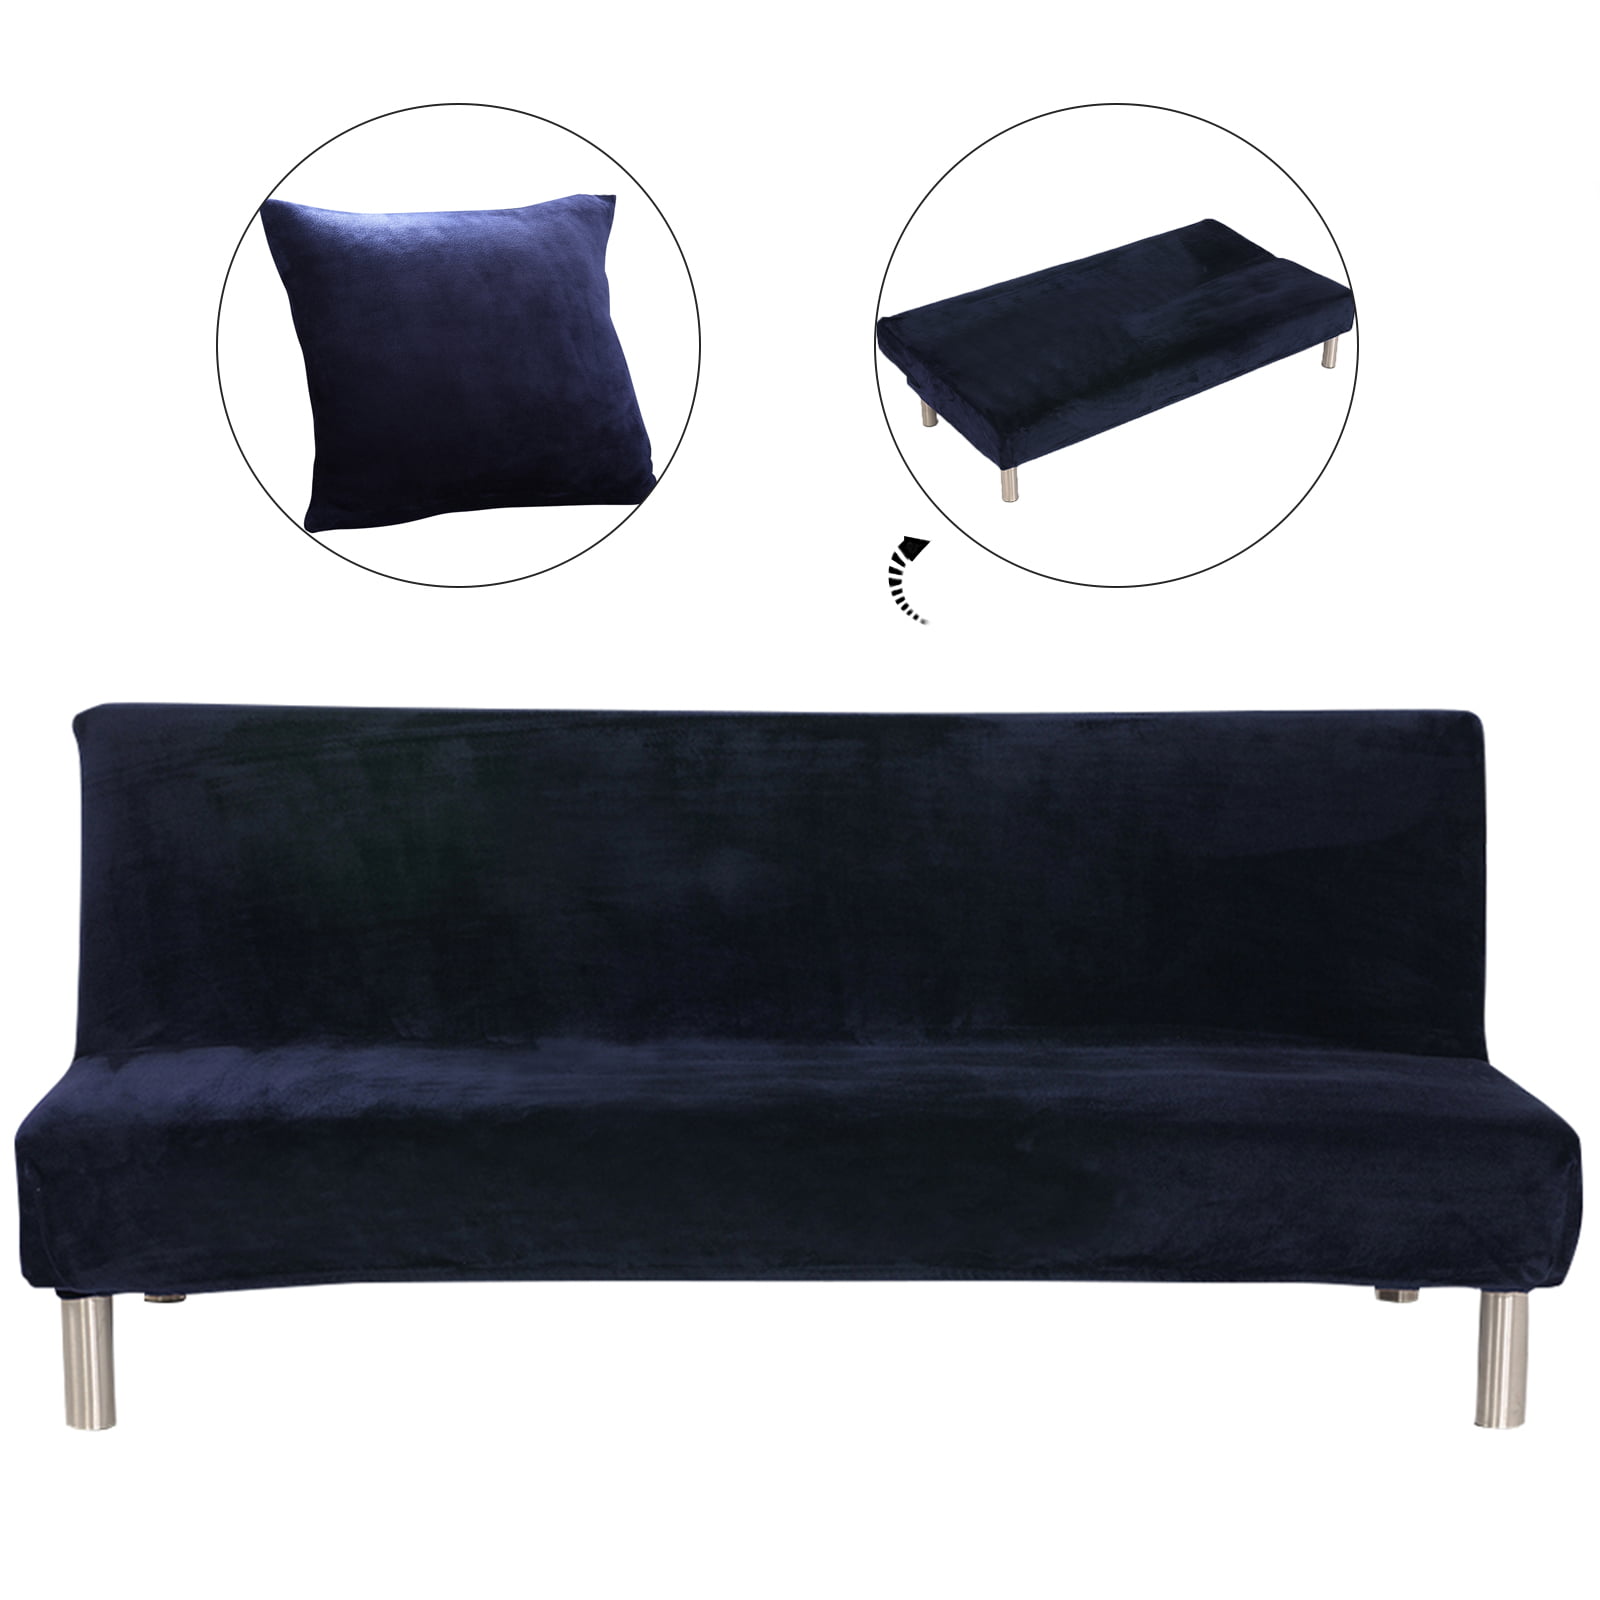 Stretch Armless Sofa Cover Futon Slipcover Full Folding Elastic 1/2/3/4 Seater 